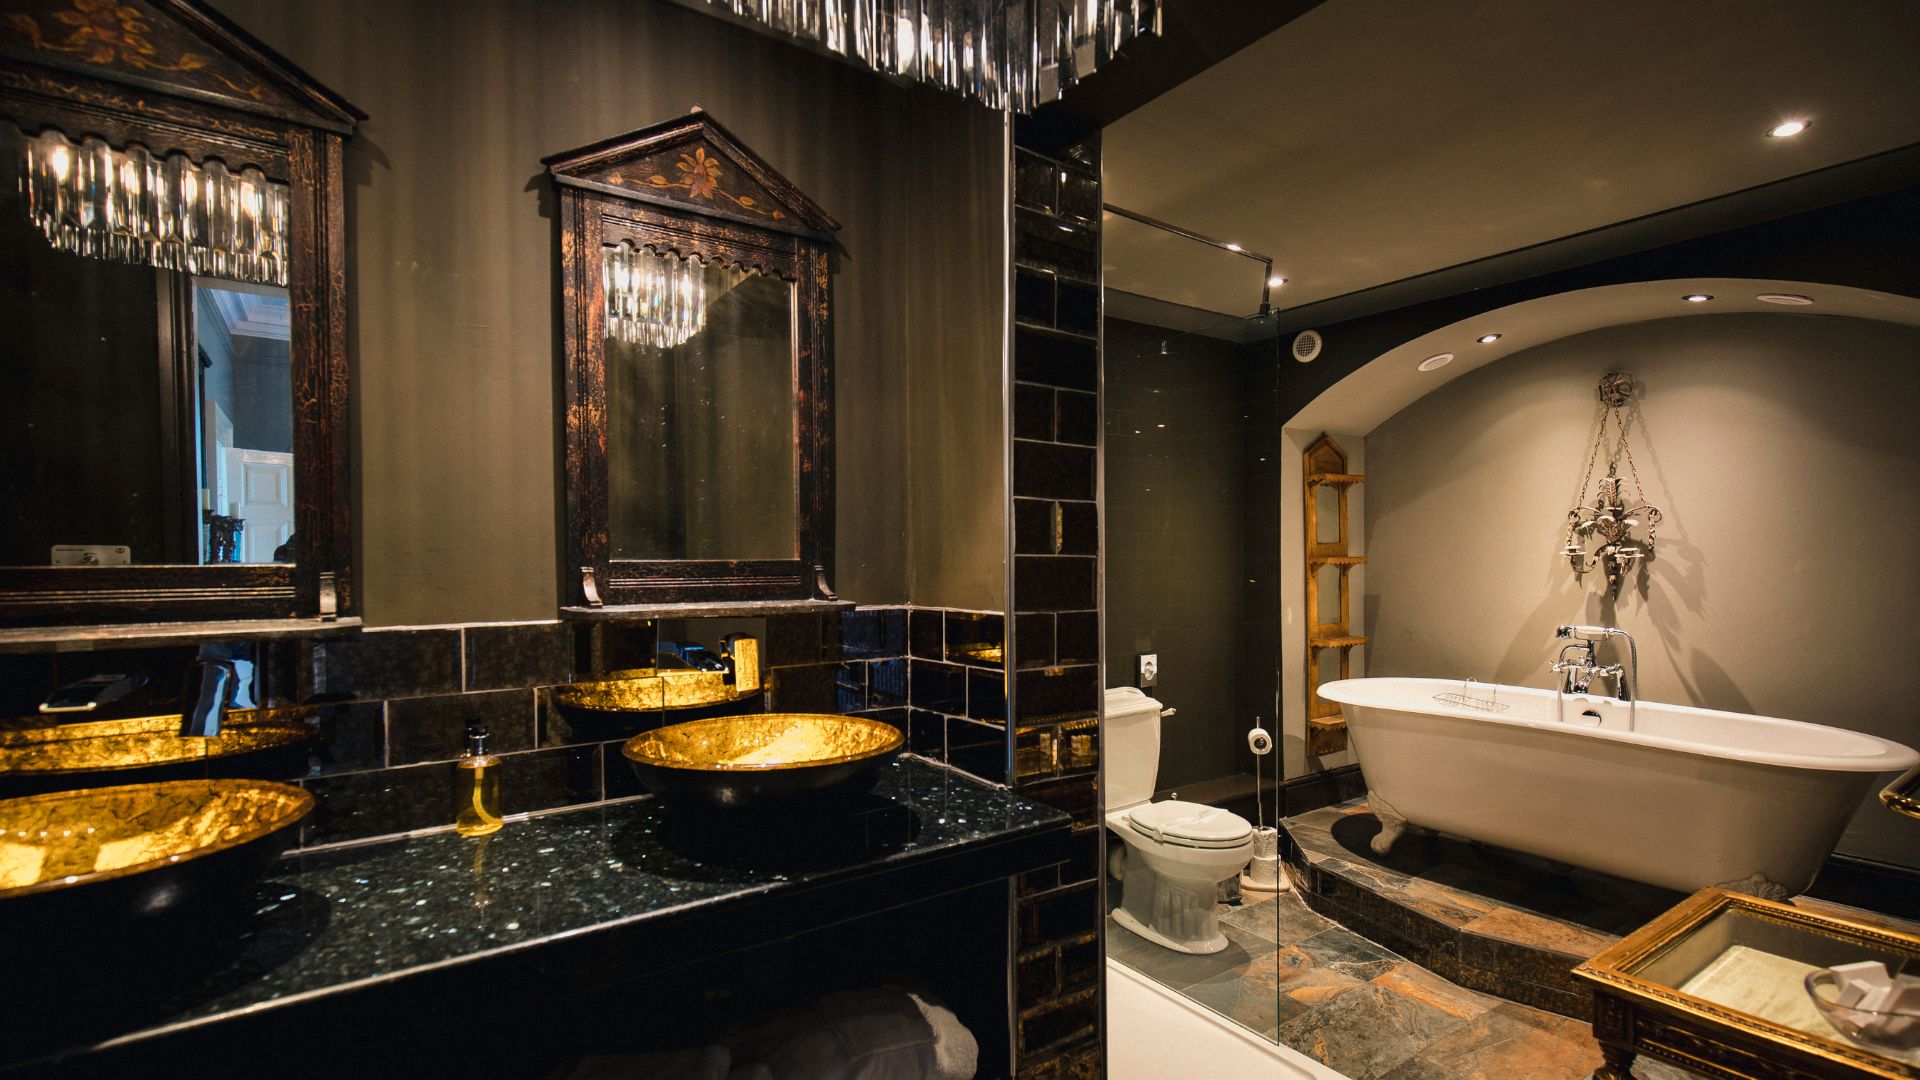 Rustic dark bathroom style with black countertop, and golden vessel sink